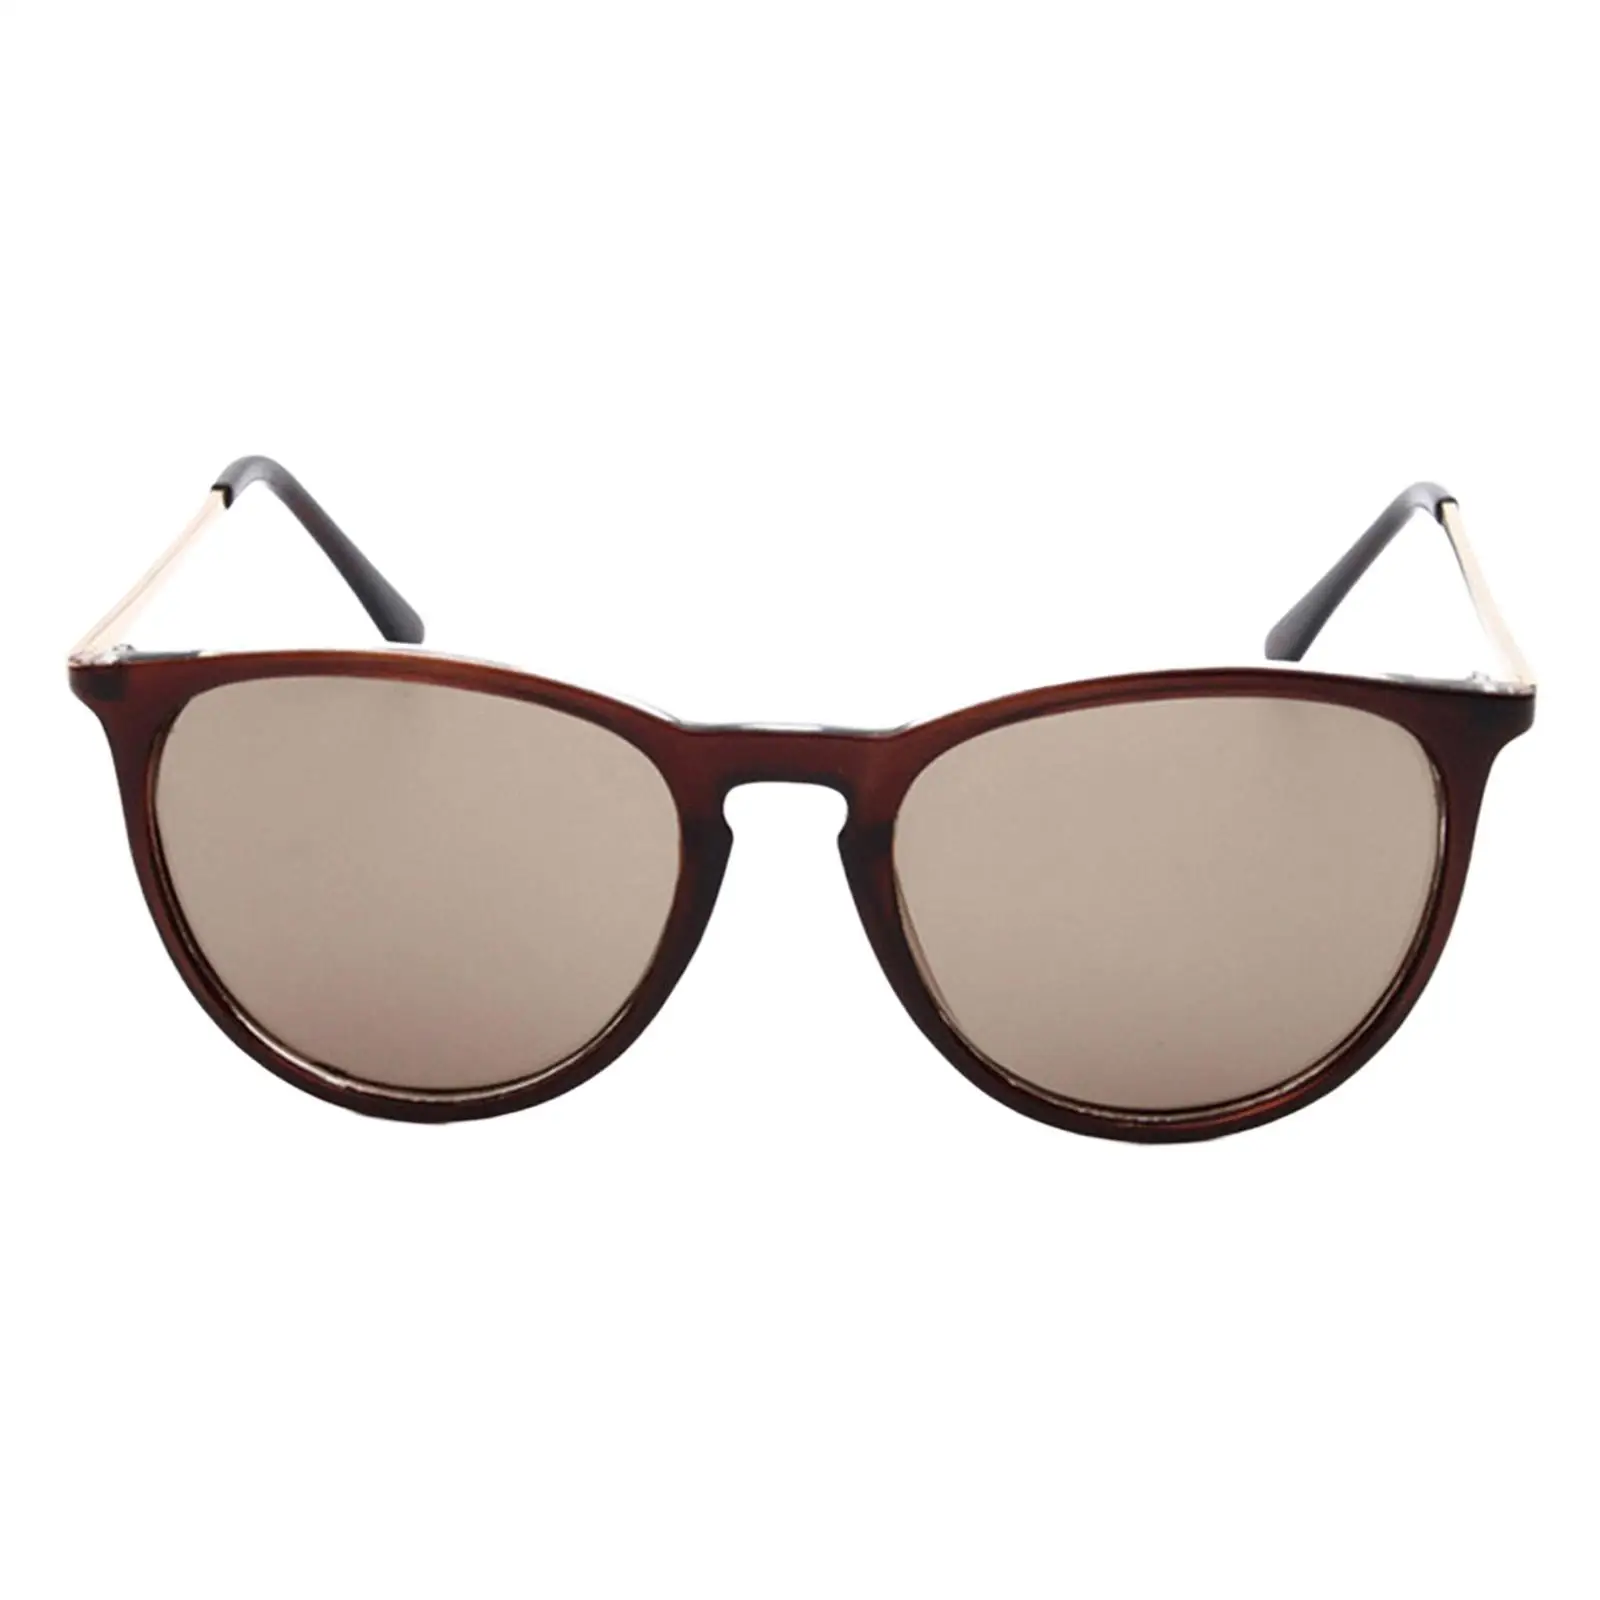 Retro Style Sunglasses Eyewear UV400 Protection Sun Glasses Photo Props